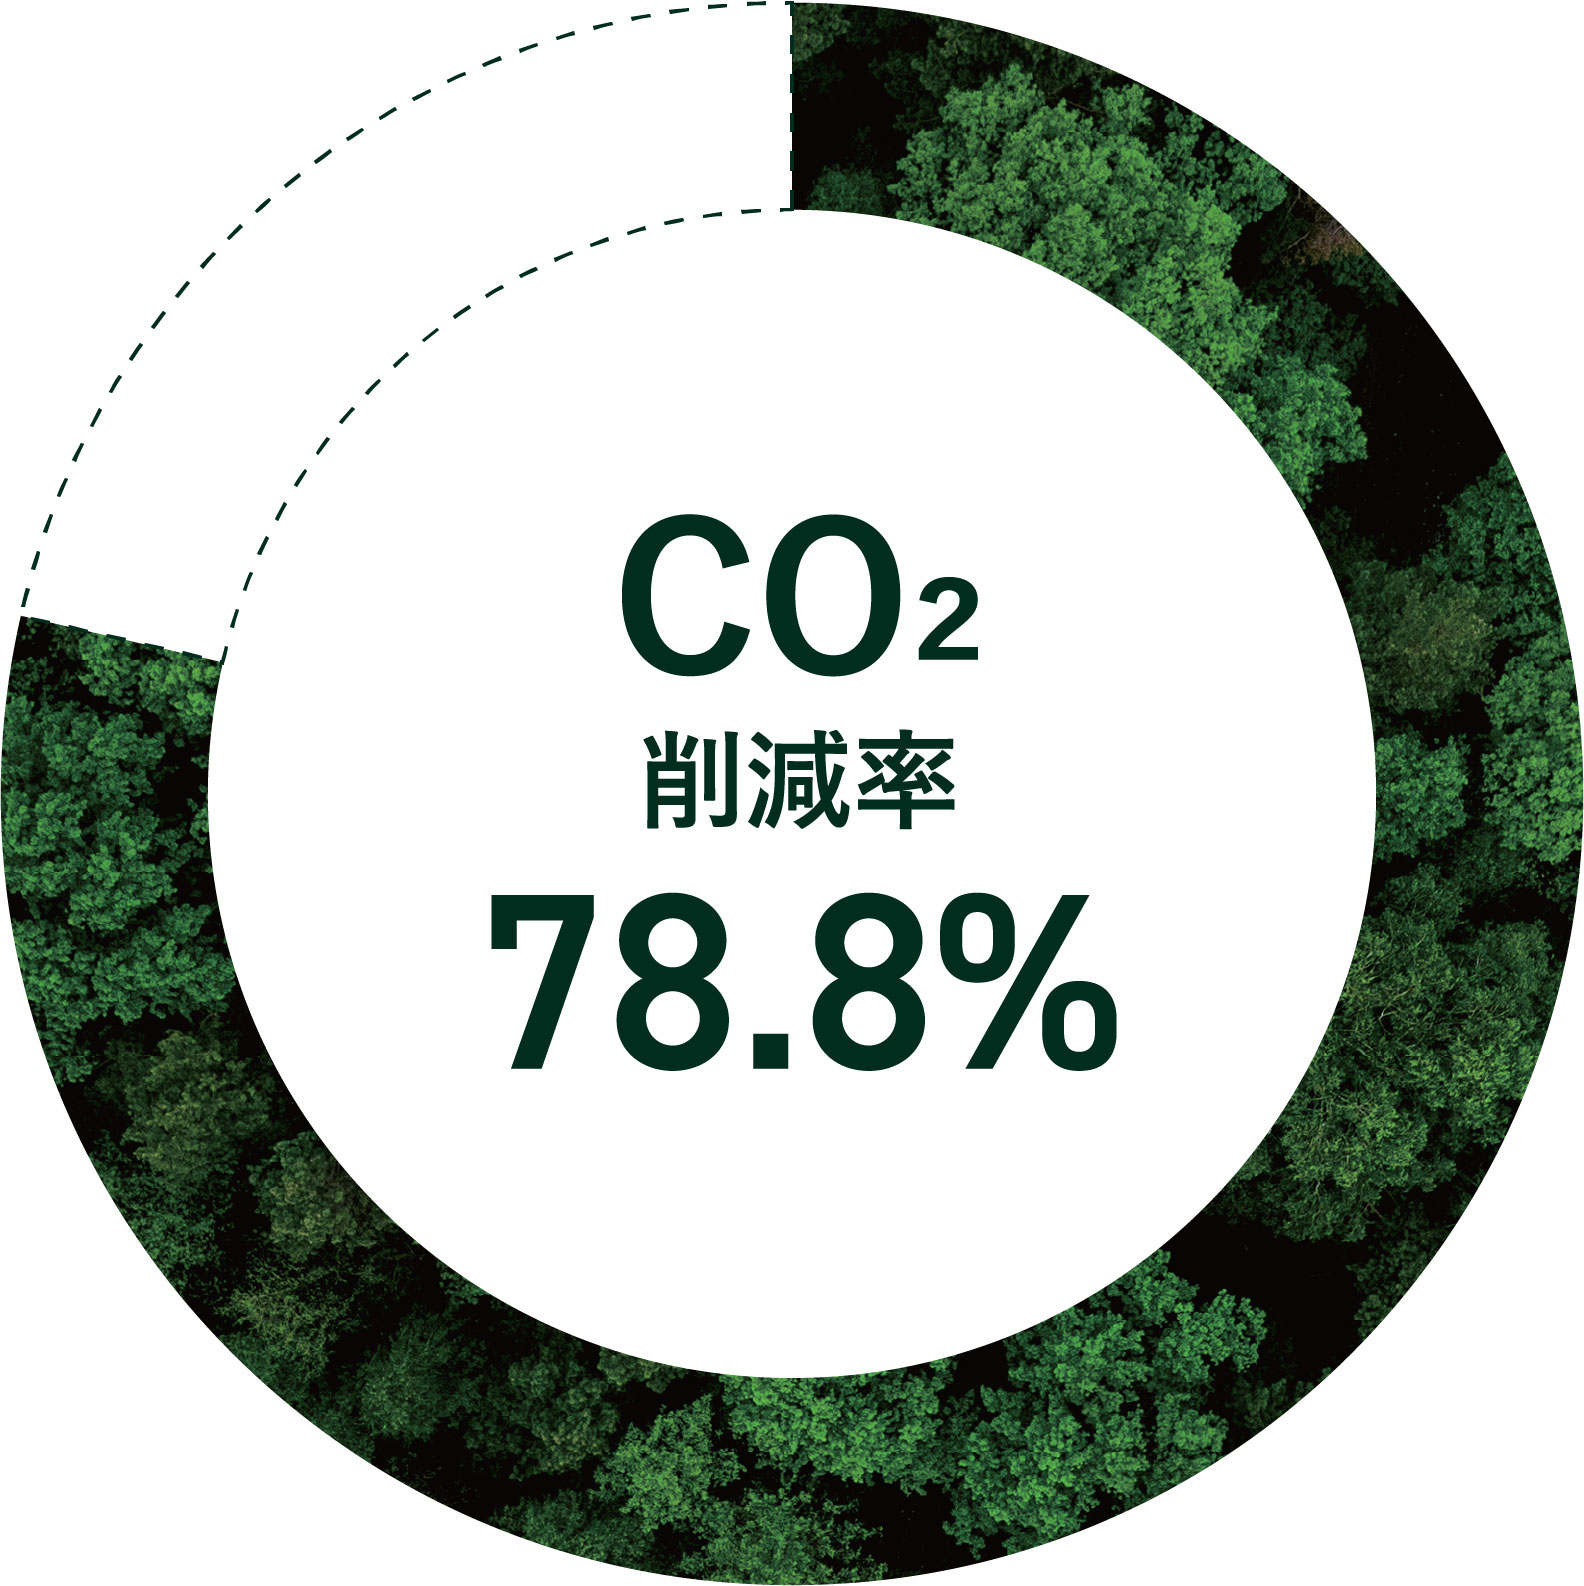 CO2 削減率 78.8%